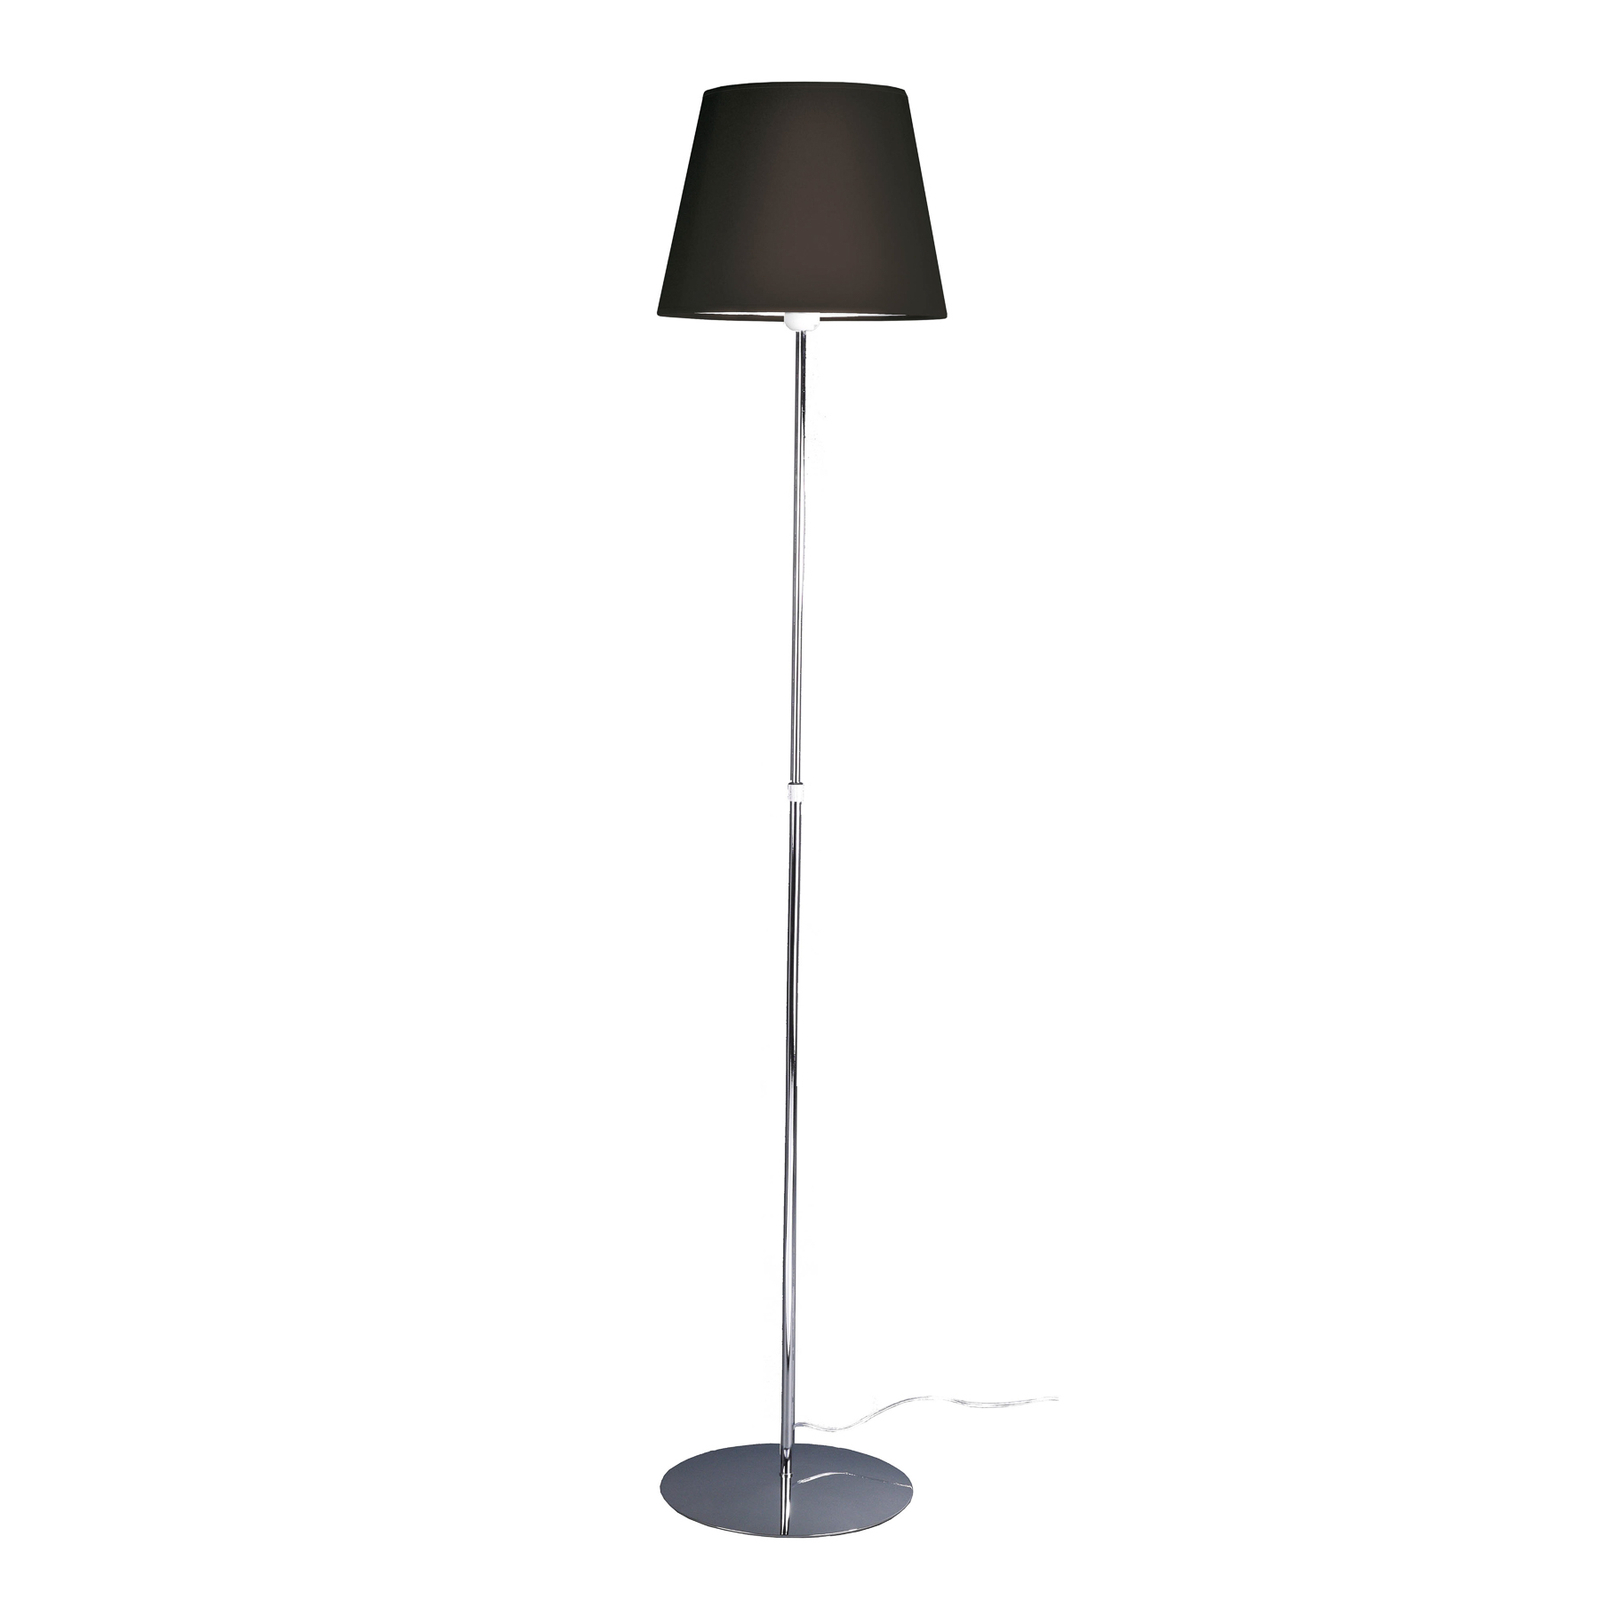 Aluminor Store Stehlampe, chrom/schwarz